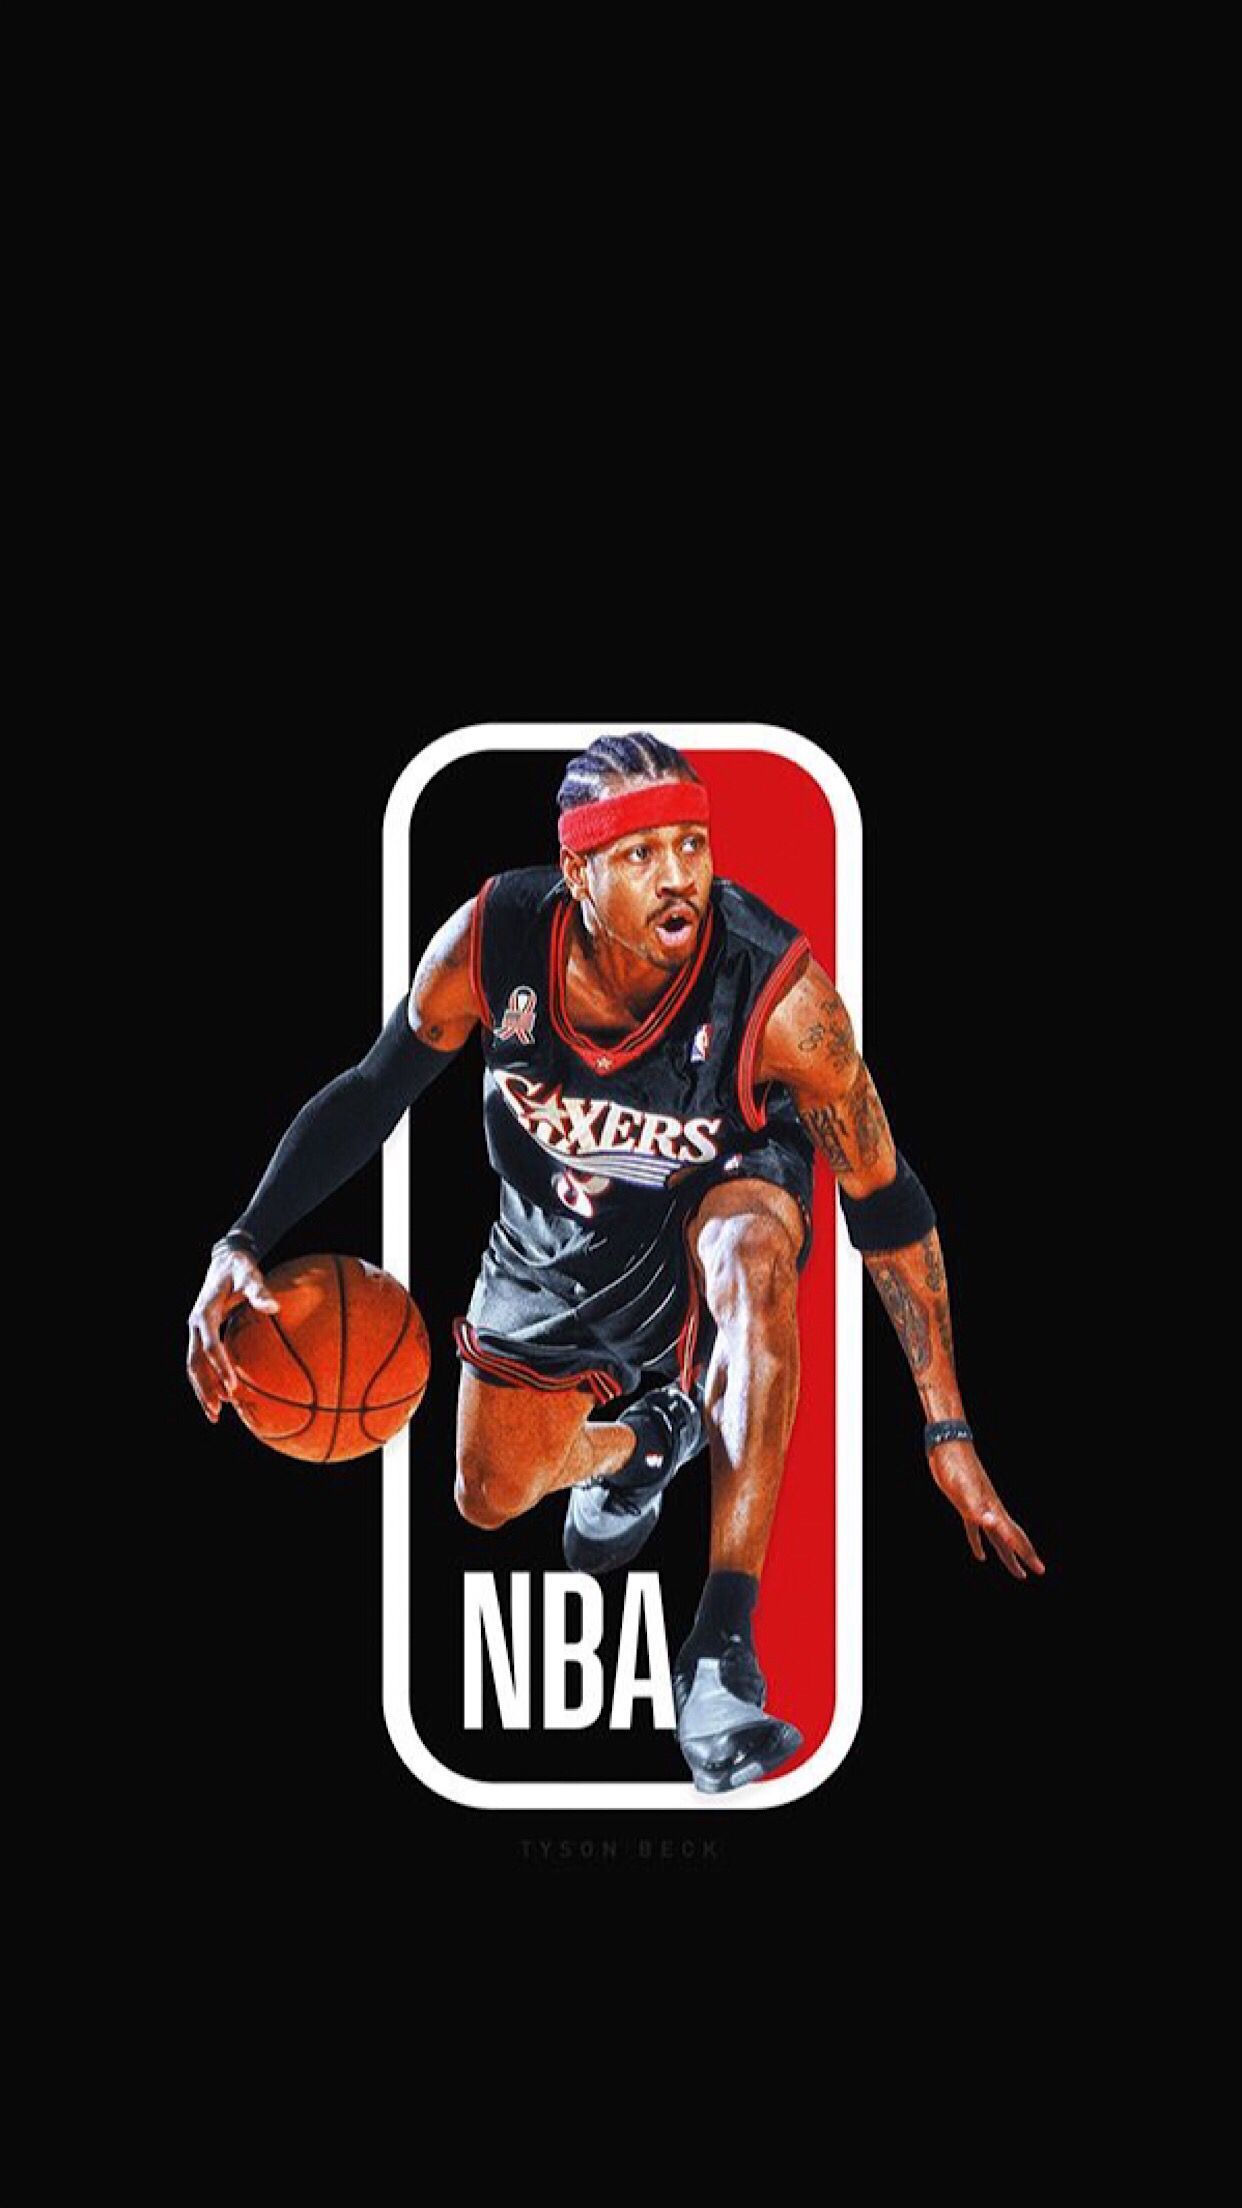 Animated Basketball Players Wallpapers - Wallpaper Cave  Nba wallpapers,  Basketball wallpaper, Basketball players